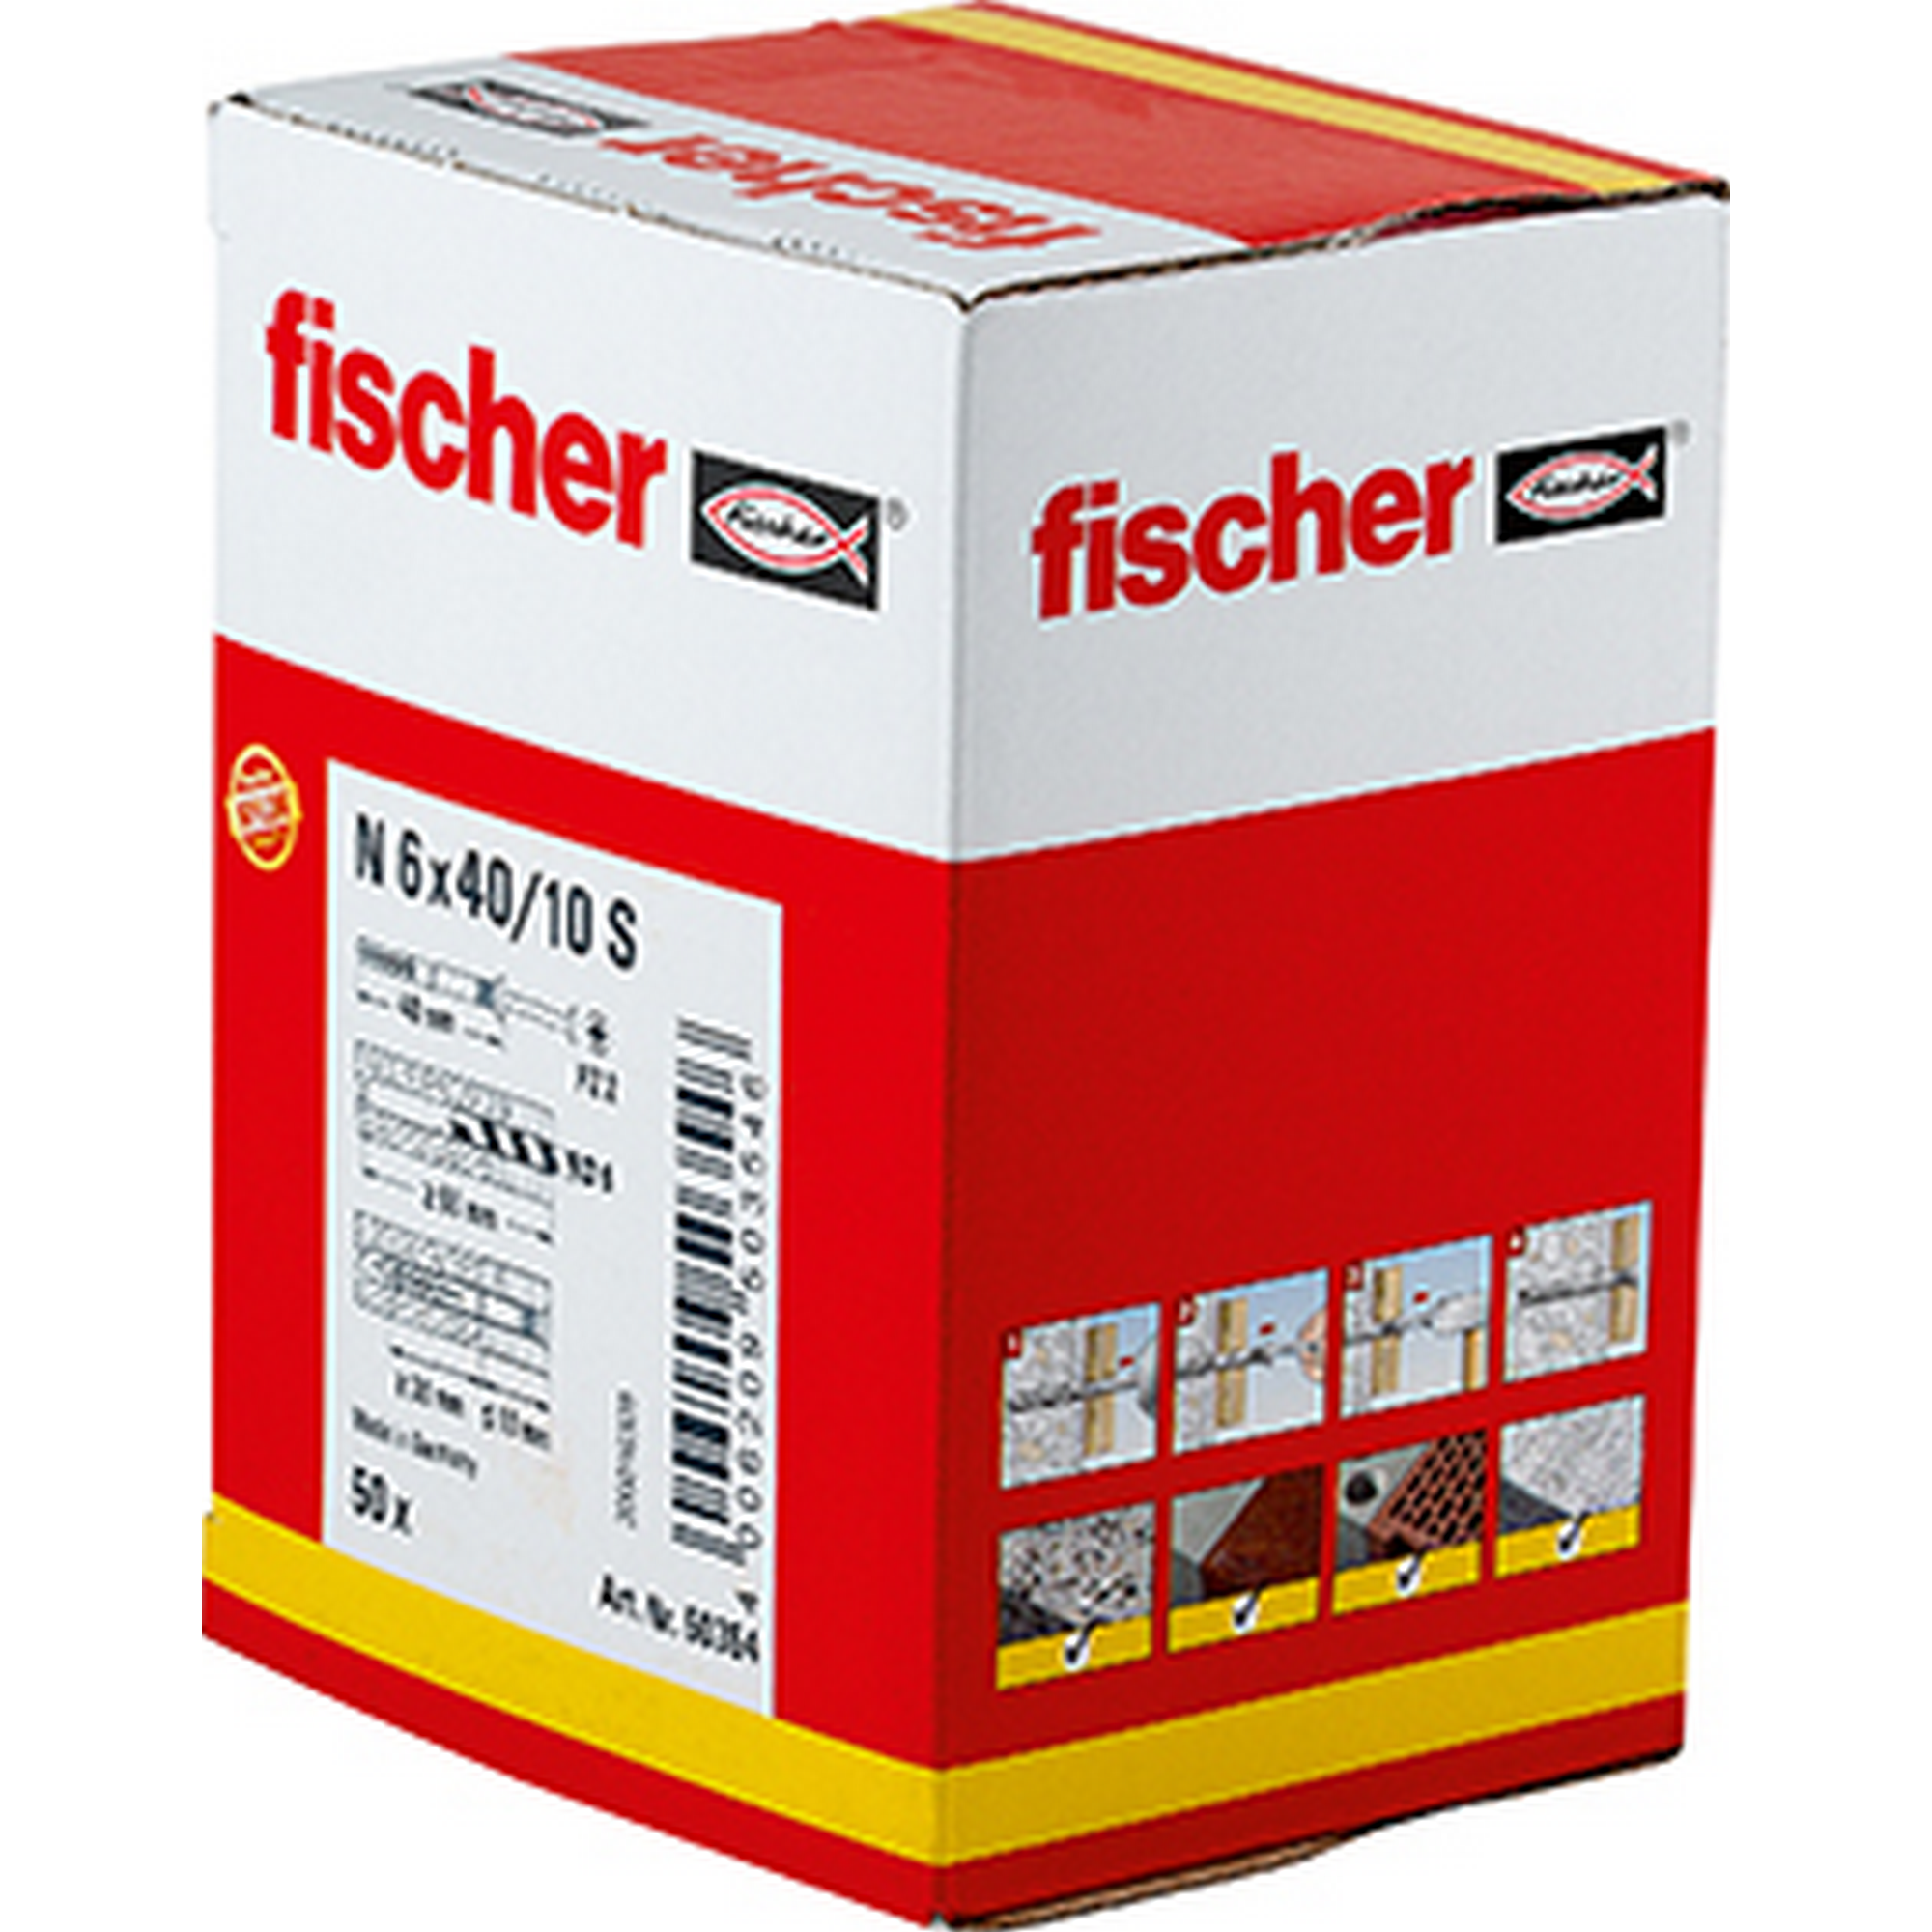 fischer Nageldübel N 6 x 40/10 S Senkkopf 50 Stück + product picture